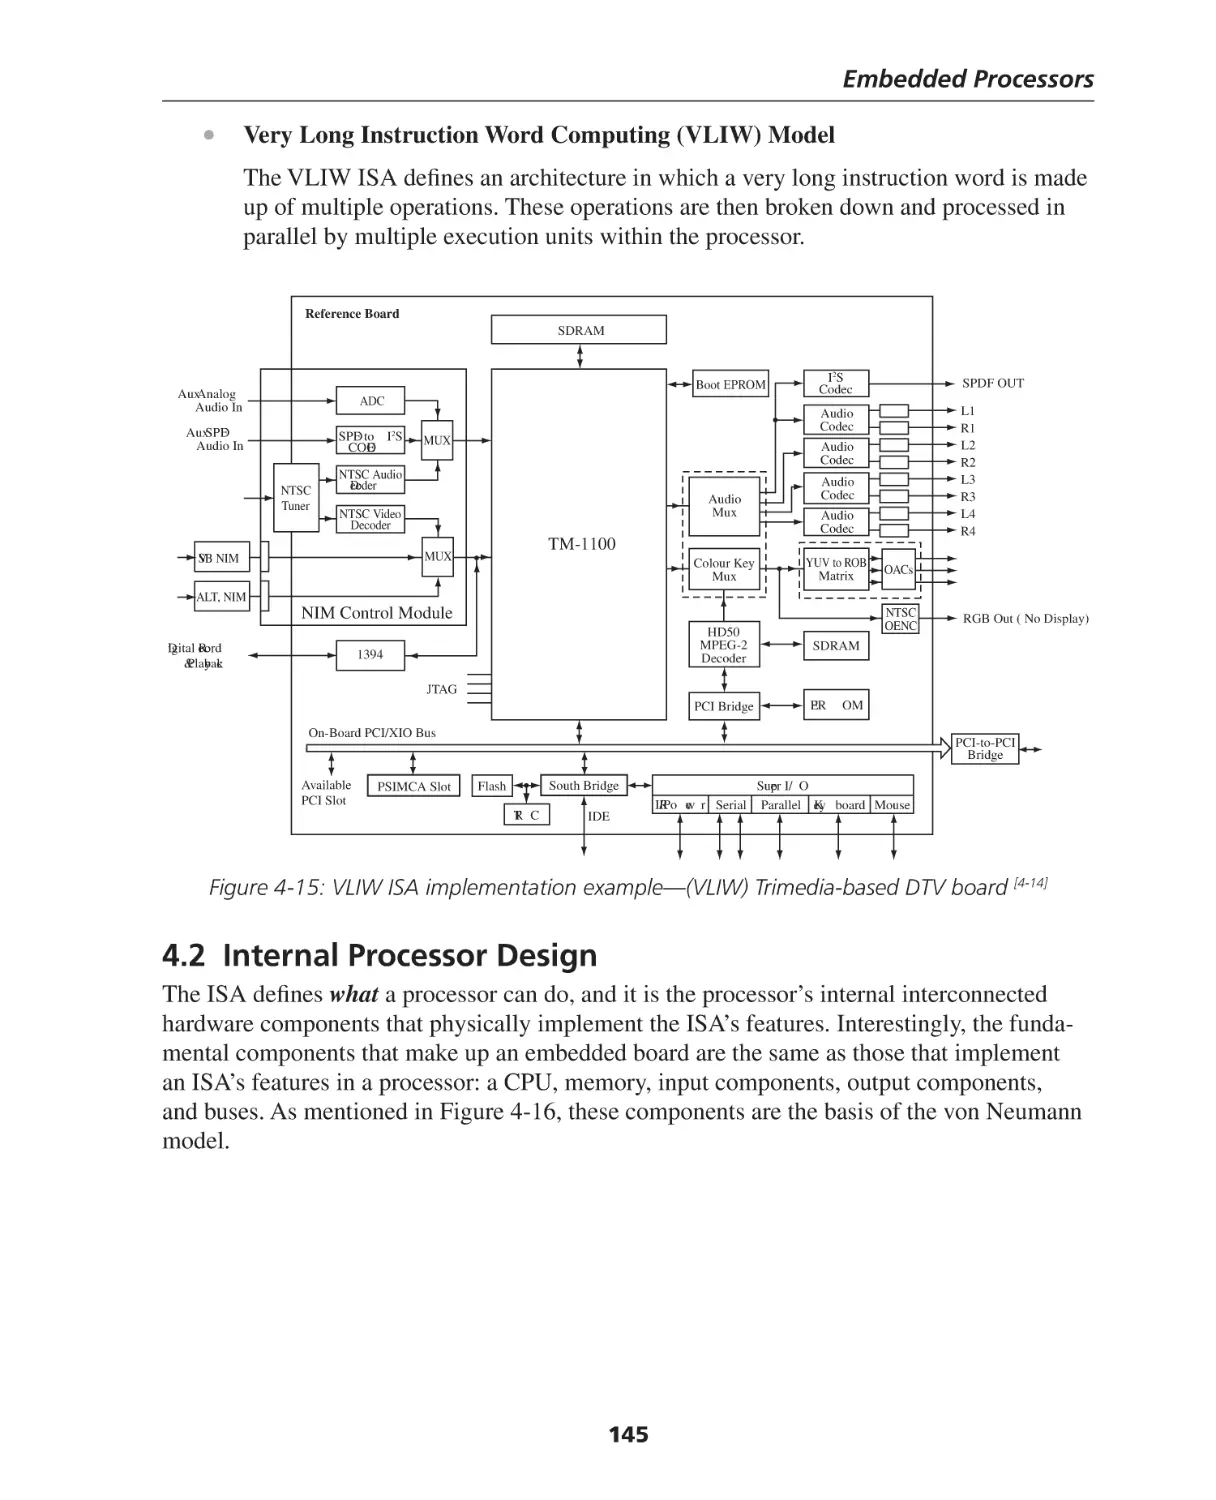 4.2 Internal Processor Design